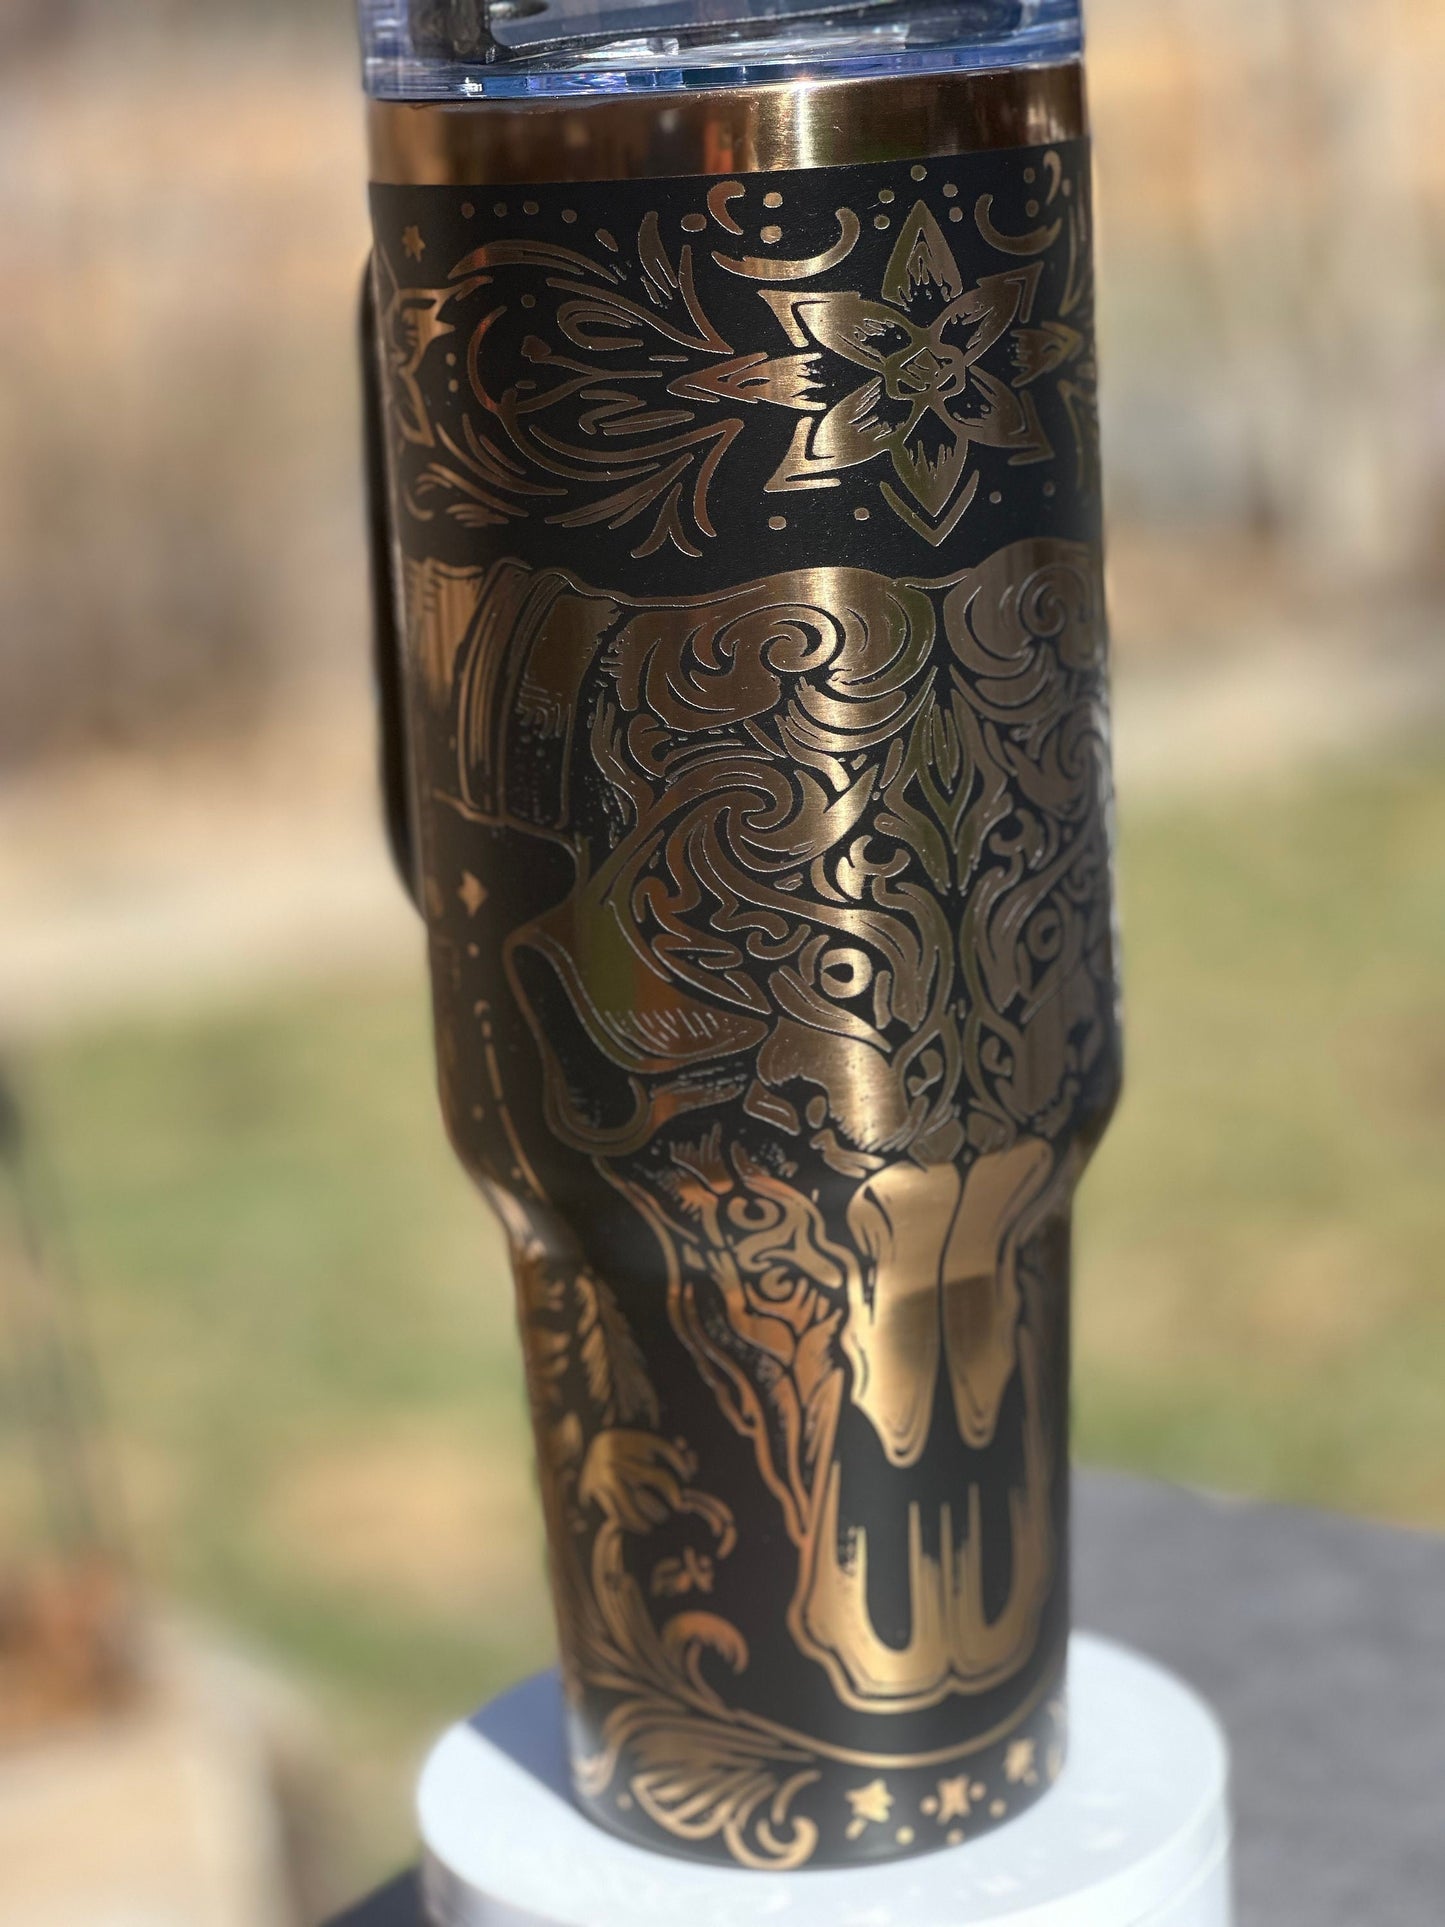 Western Charm Tumbler - Longhorn Cow Bull 40oz Engraved Cup, Black & Copper Design